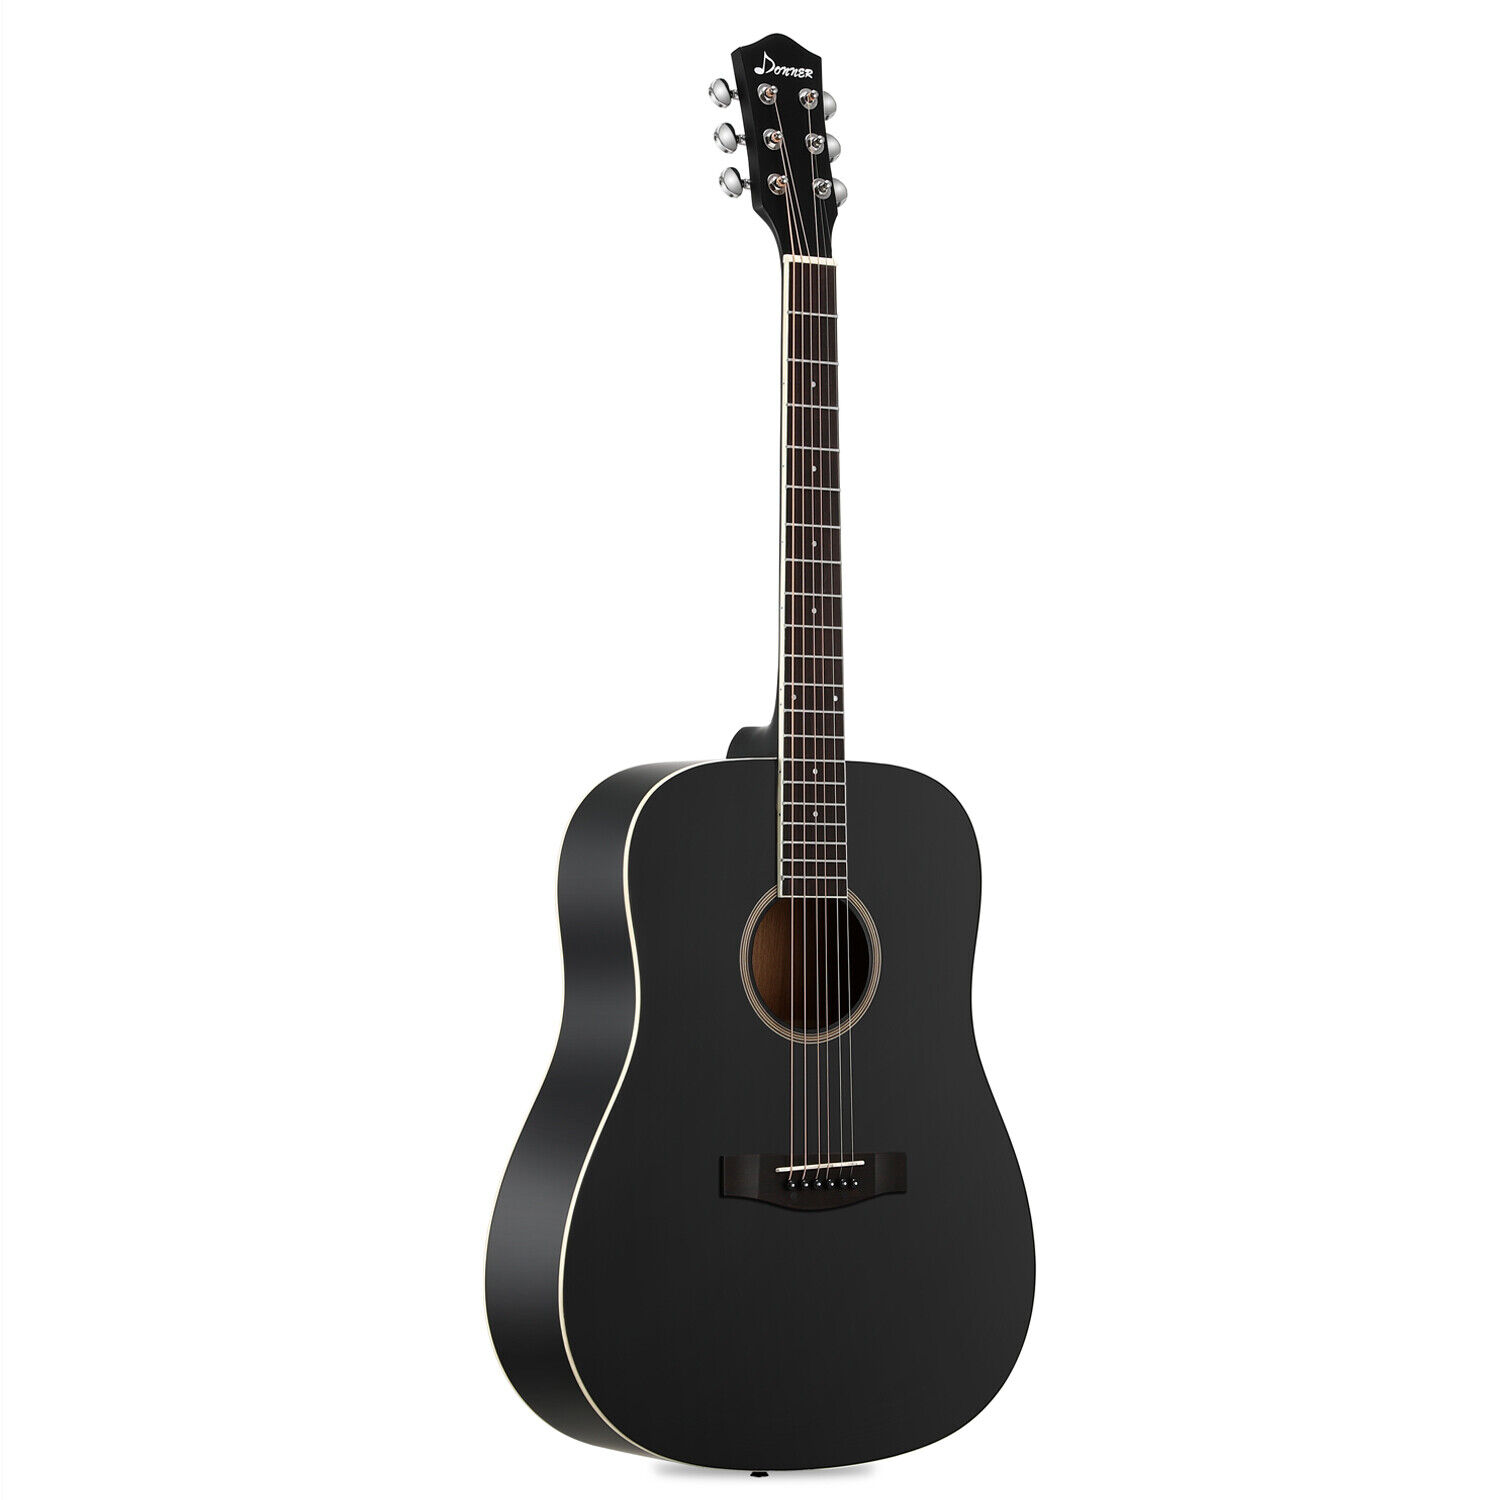 Donner DAG-1B Acoustic Guitar Full Size 41″ Cutaway Mahogany +Bag Strap | Refurb 10